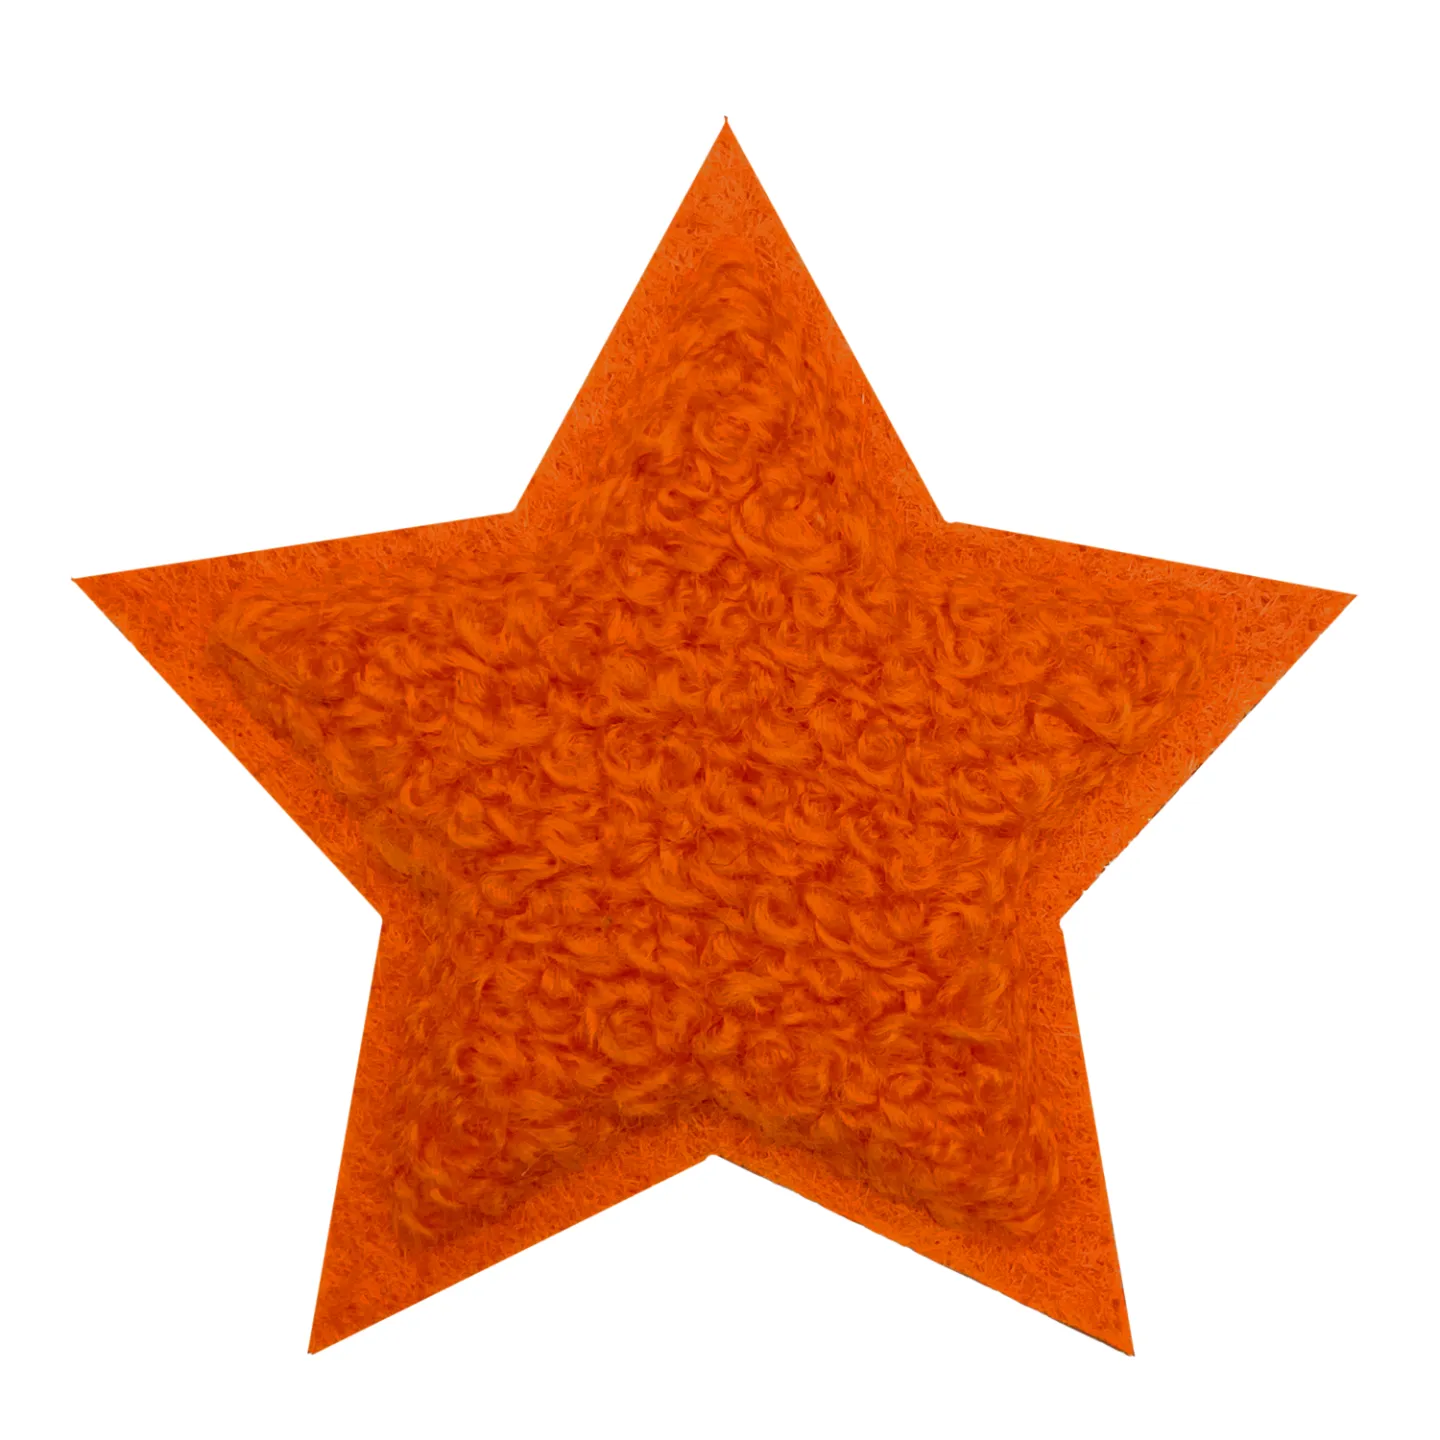 Kruikenstad embleem - Chenille ster oranje.